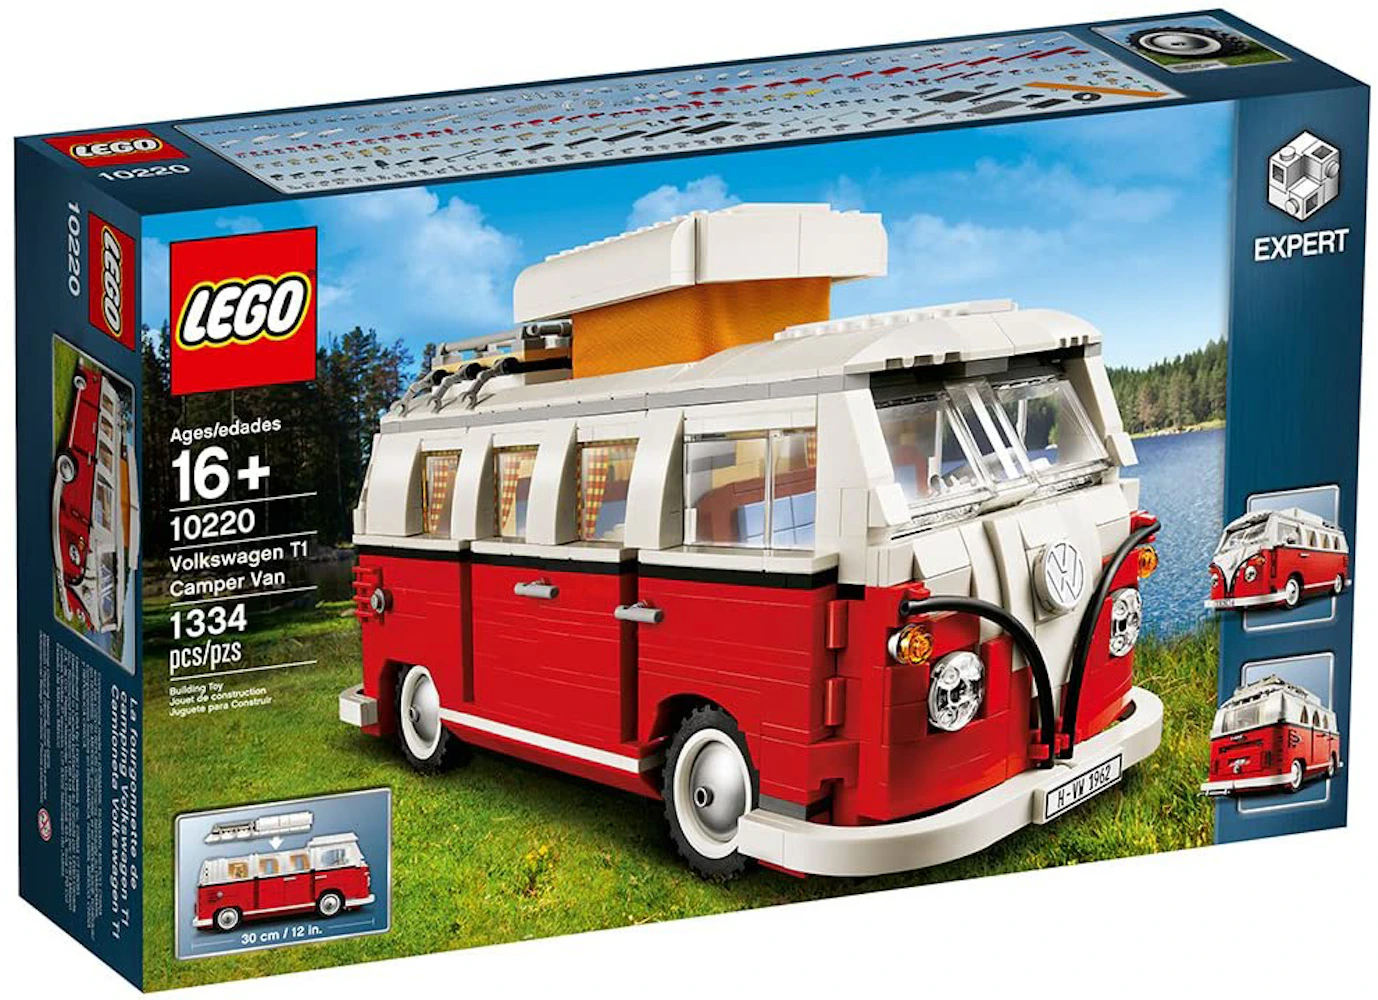 https://images.stockx.com/images/Lego-Volkswagen-T1-Camper-Set-10220.jpg?fit=fill&bg=FFFFFF&w=700&h=500&fm=webp&auto=compress&q=90&dpr=2&trim=color&updated_at=1611070413